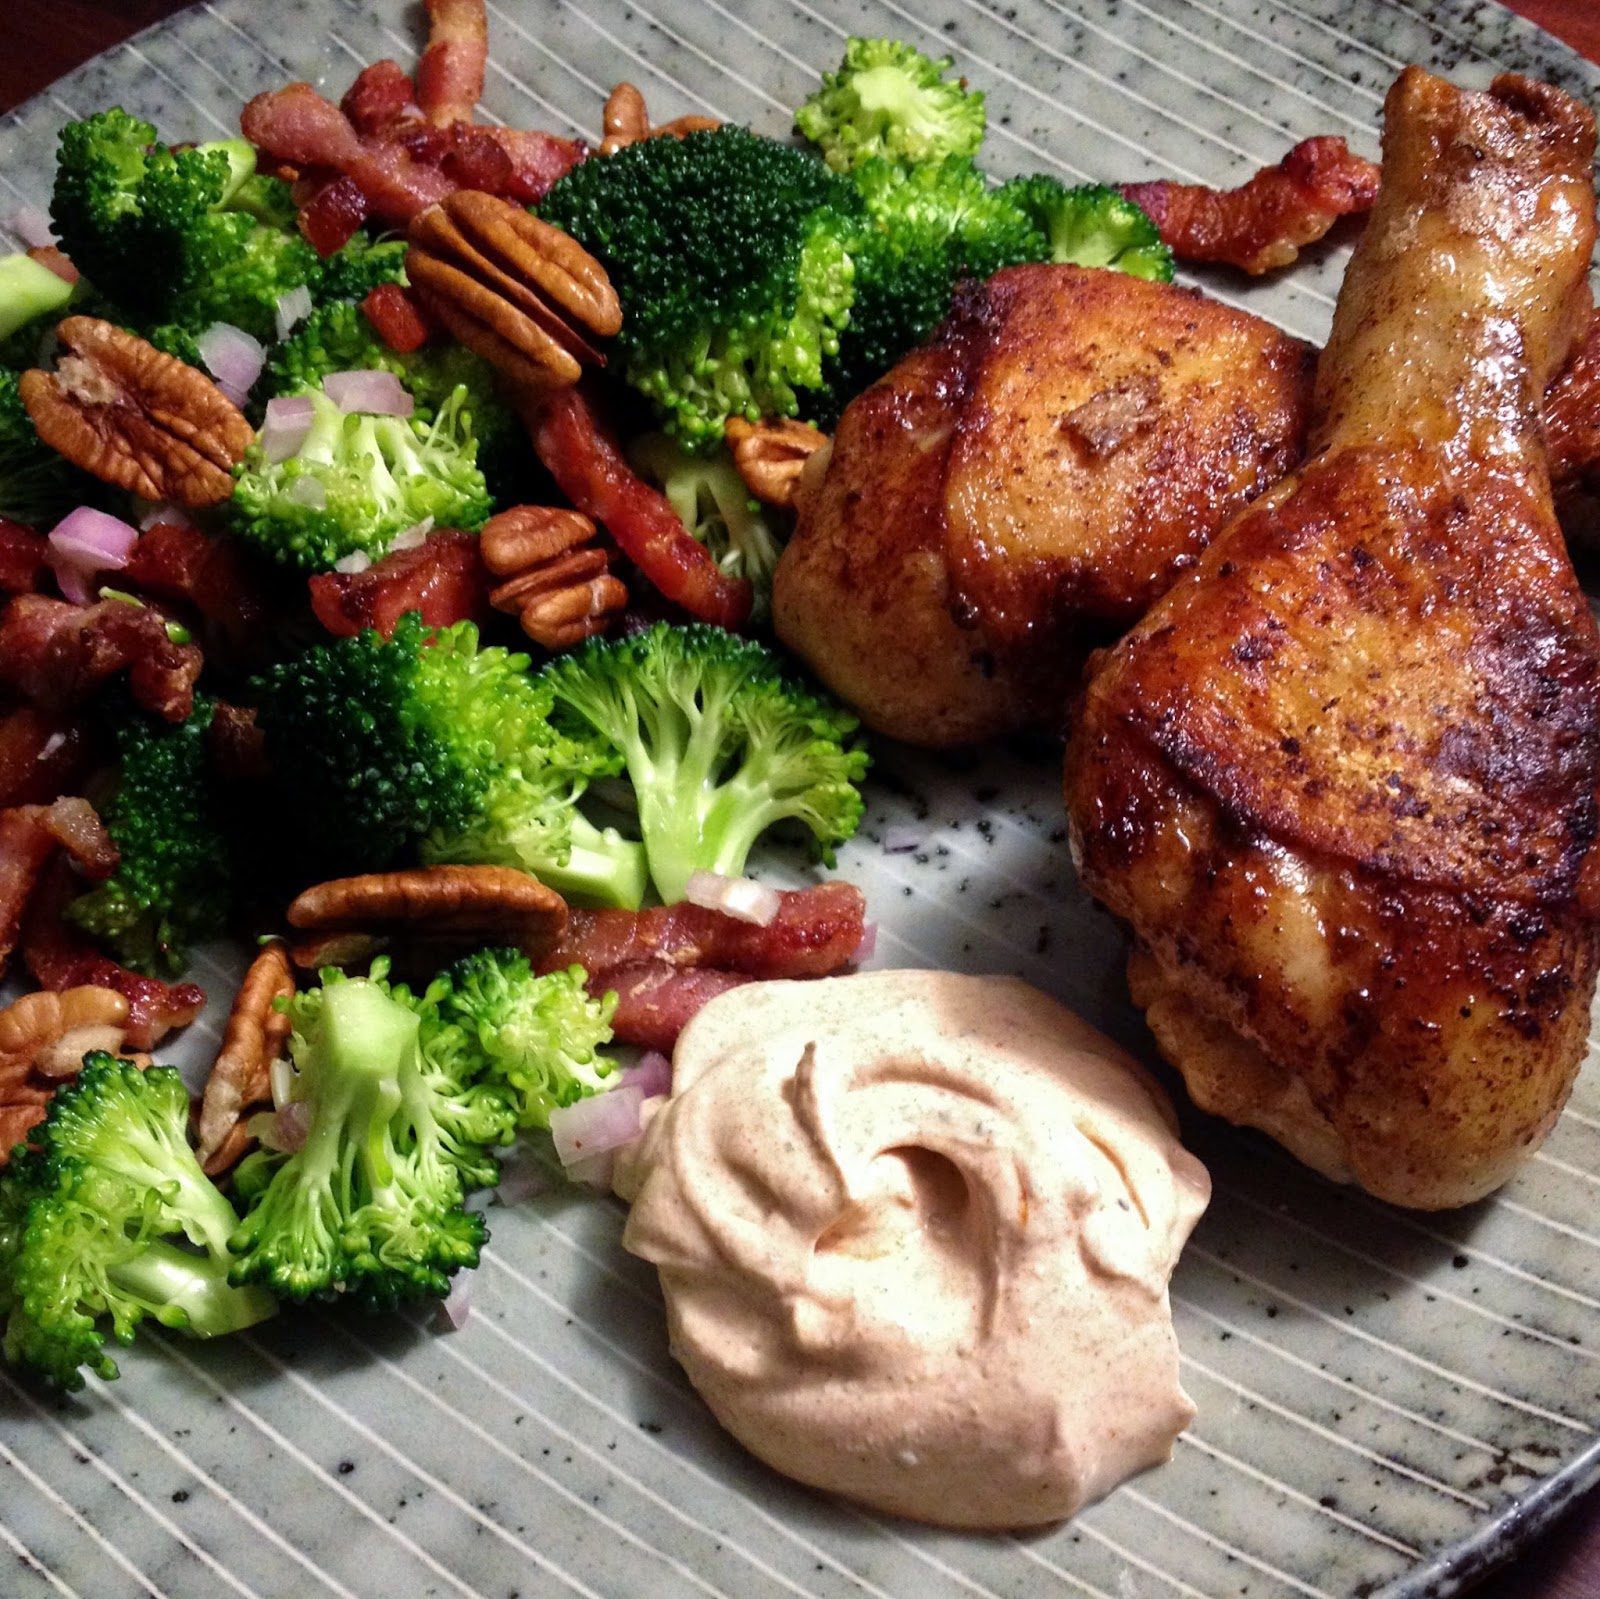 LCHF Livin': Sprøde kyllingelår med broccolisalat og pekannødder